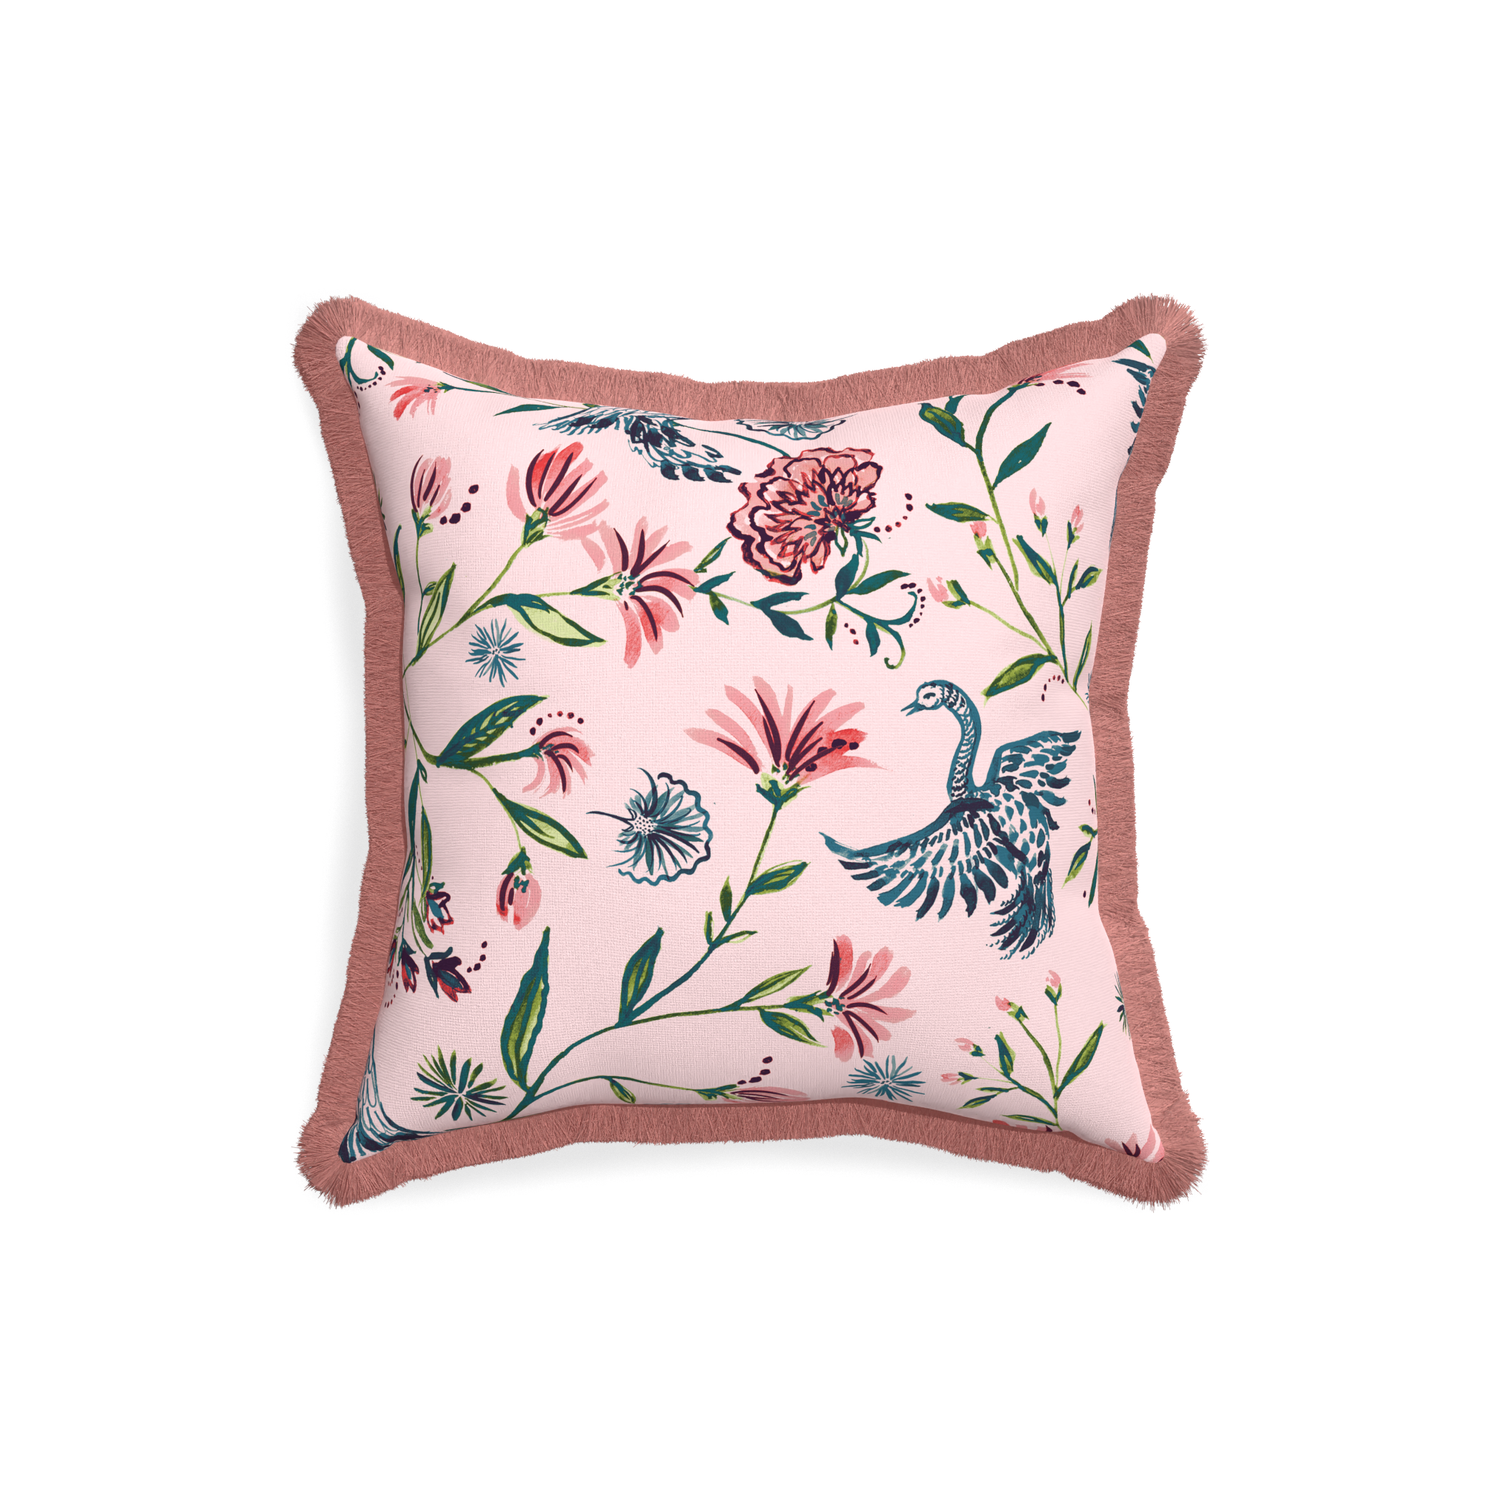 18-square daphne rose custom pillow with d fringe on white background